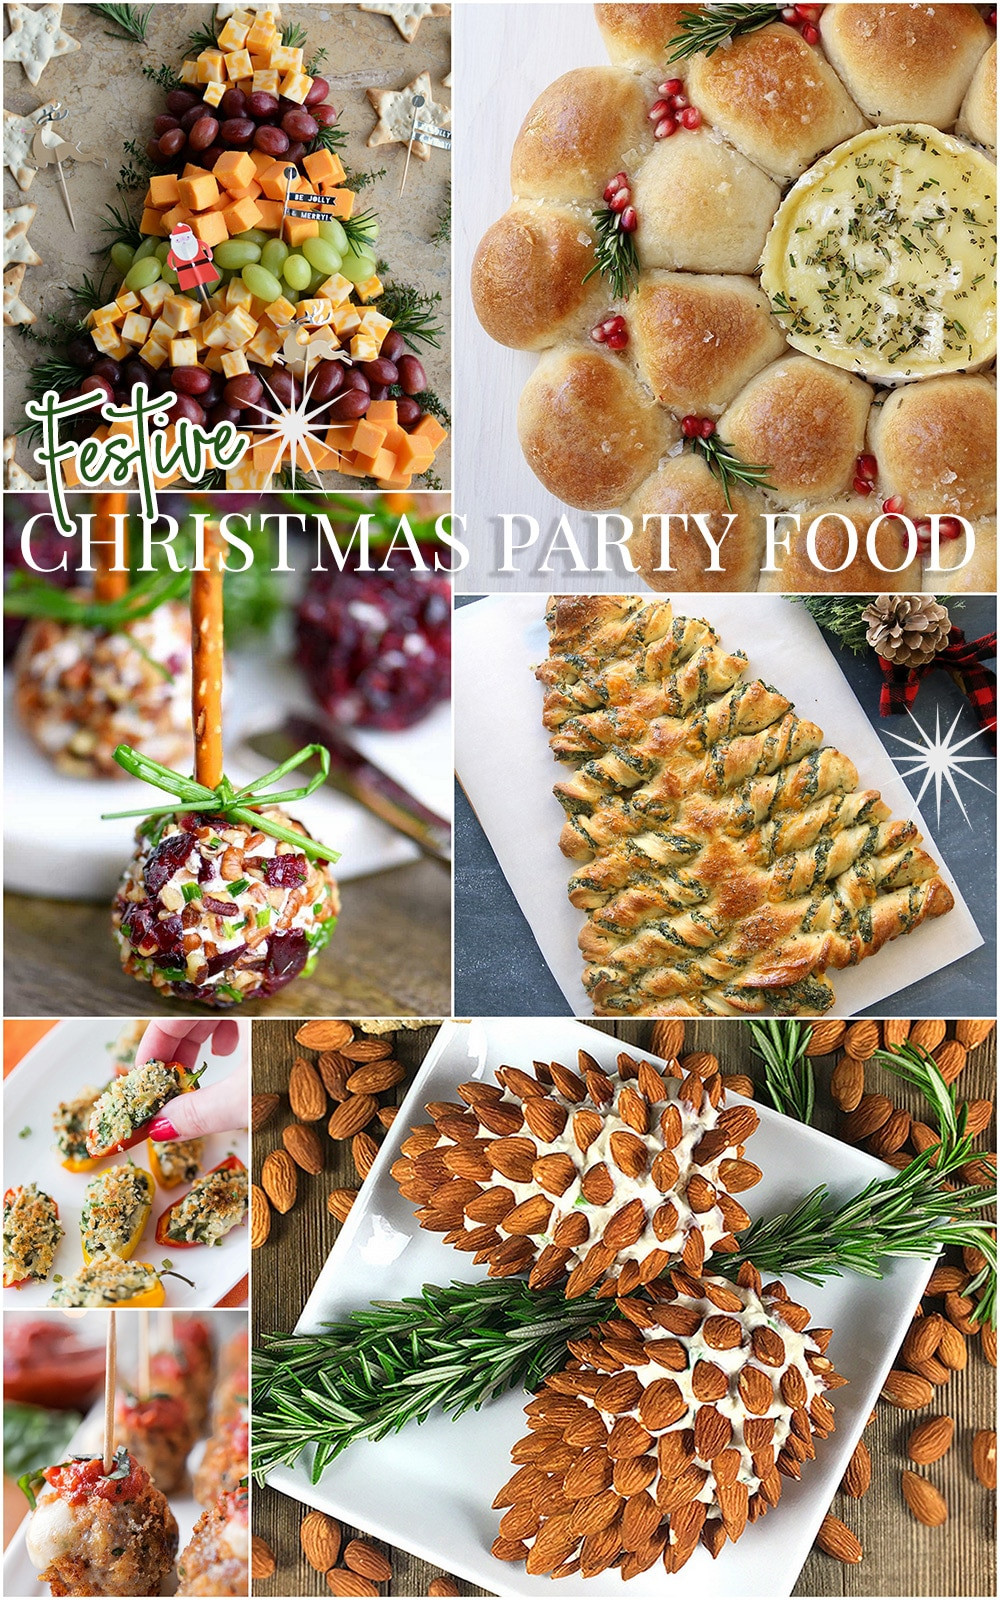 Christmas Party Finger Food Ideas
 Festive Christmas Party Food Ideas